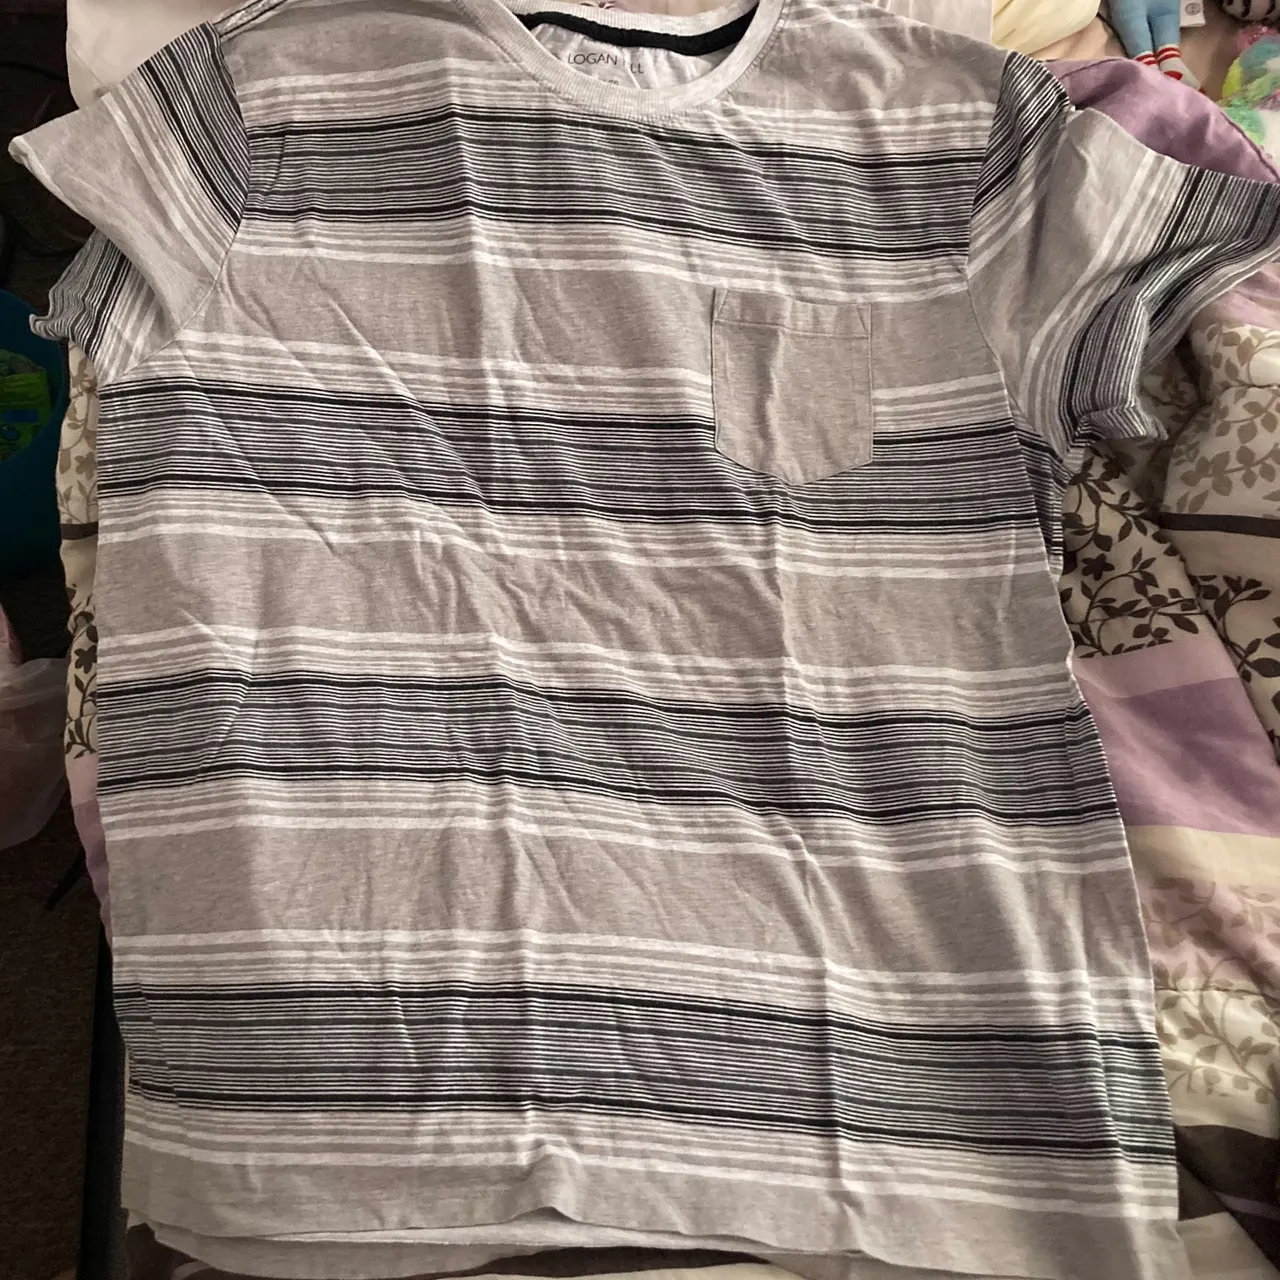 Beige/black/white striped tshirt photo 1